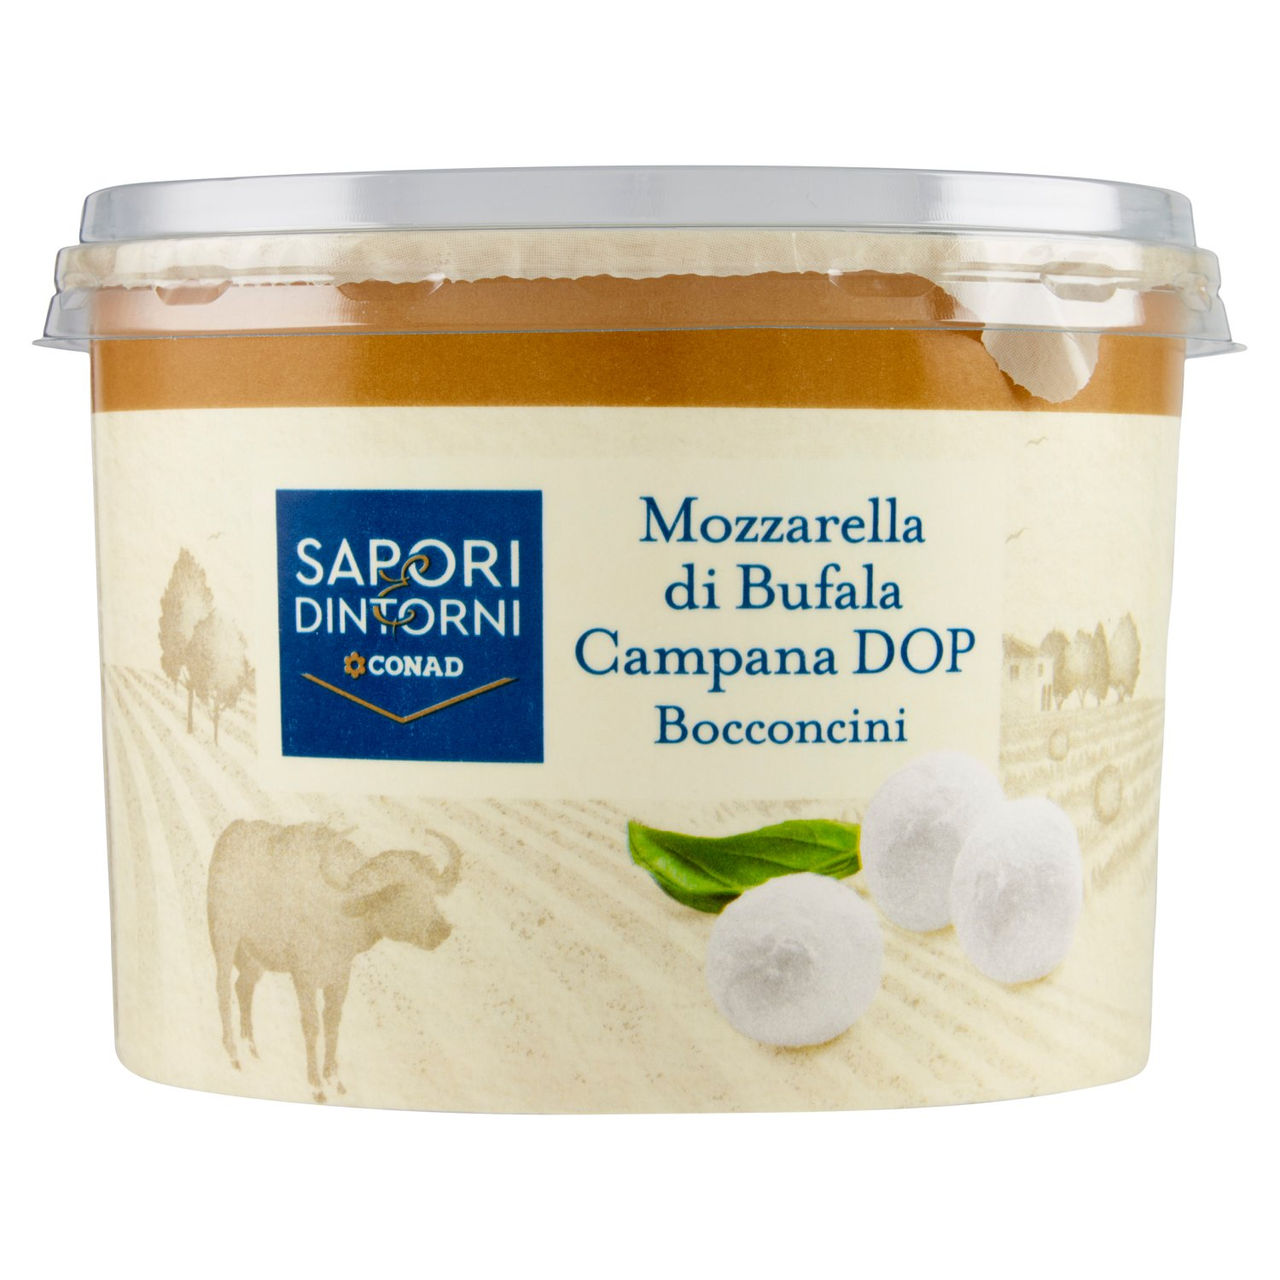 Mozzarella di Bufala Campana DOP Bocconcini 270g